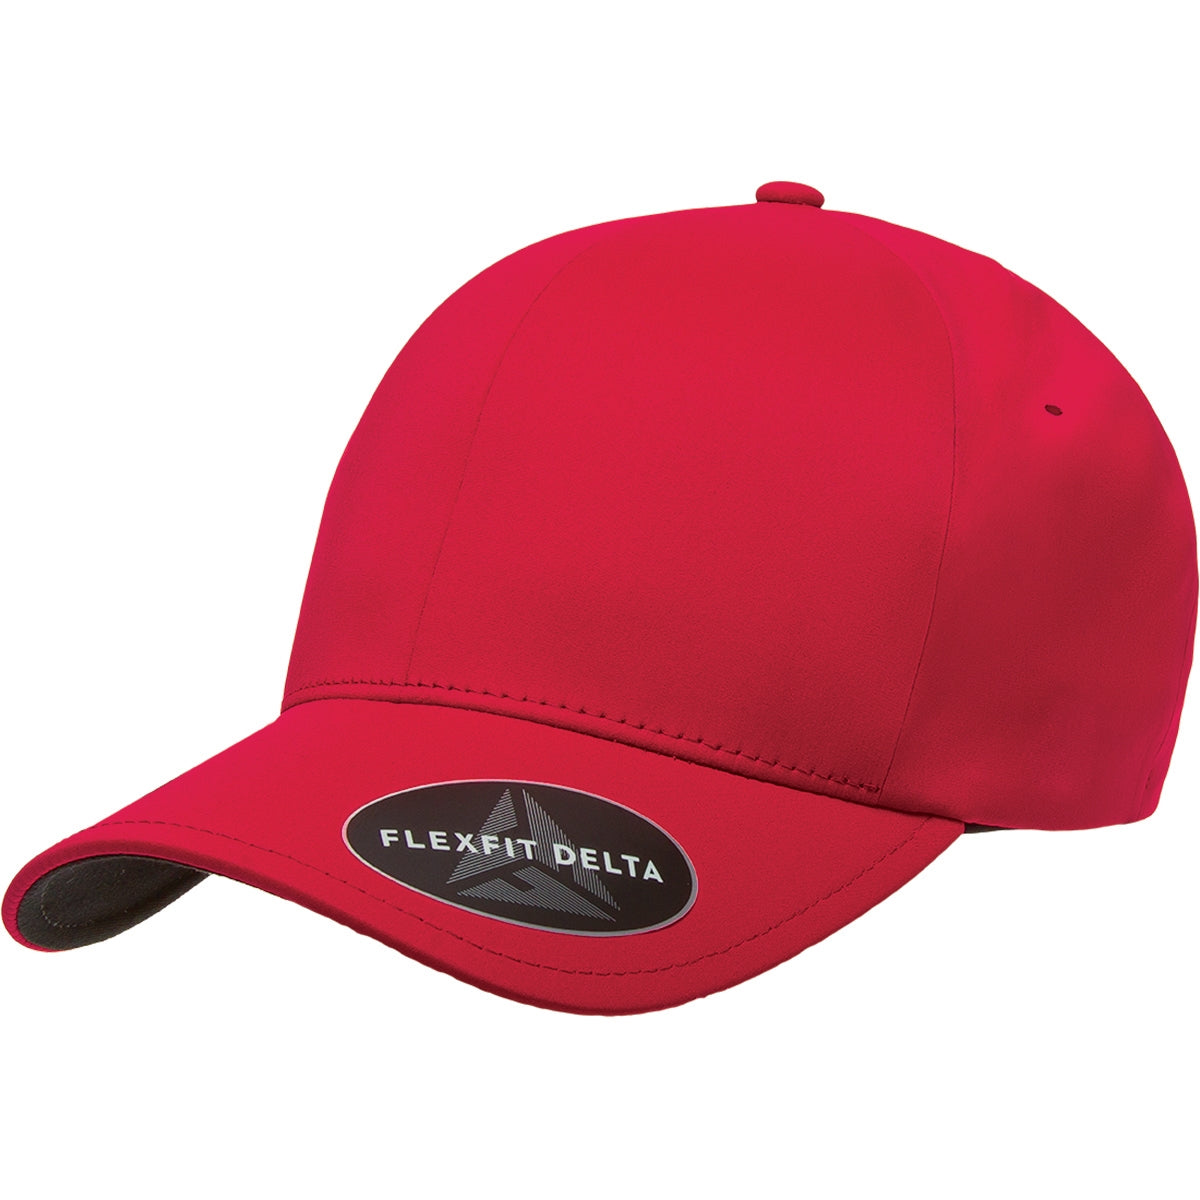 180 Flexfit Delta Embroidery Seamless | Customs VilVan Custom Hats